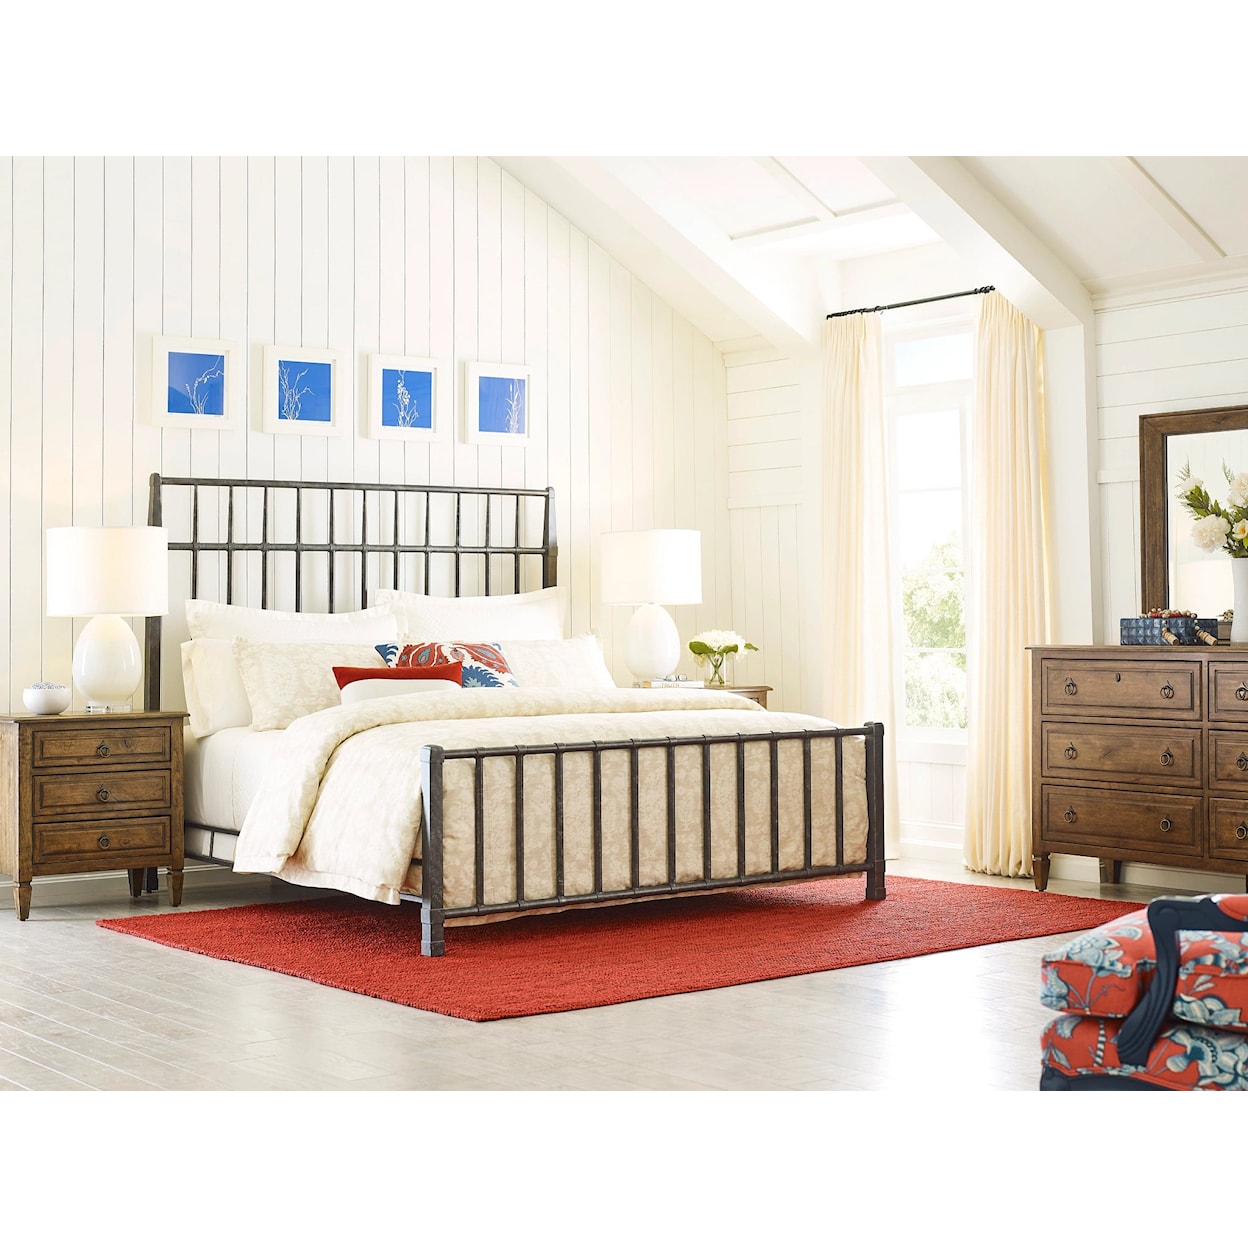 Kincaid Furniture Ansley Sylvan King Metal Bed Complete